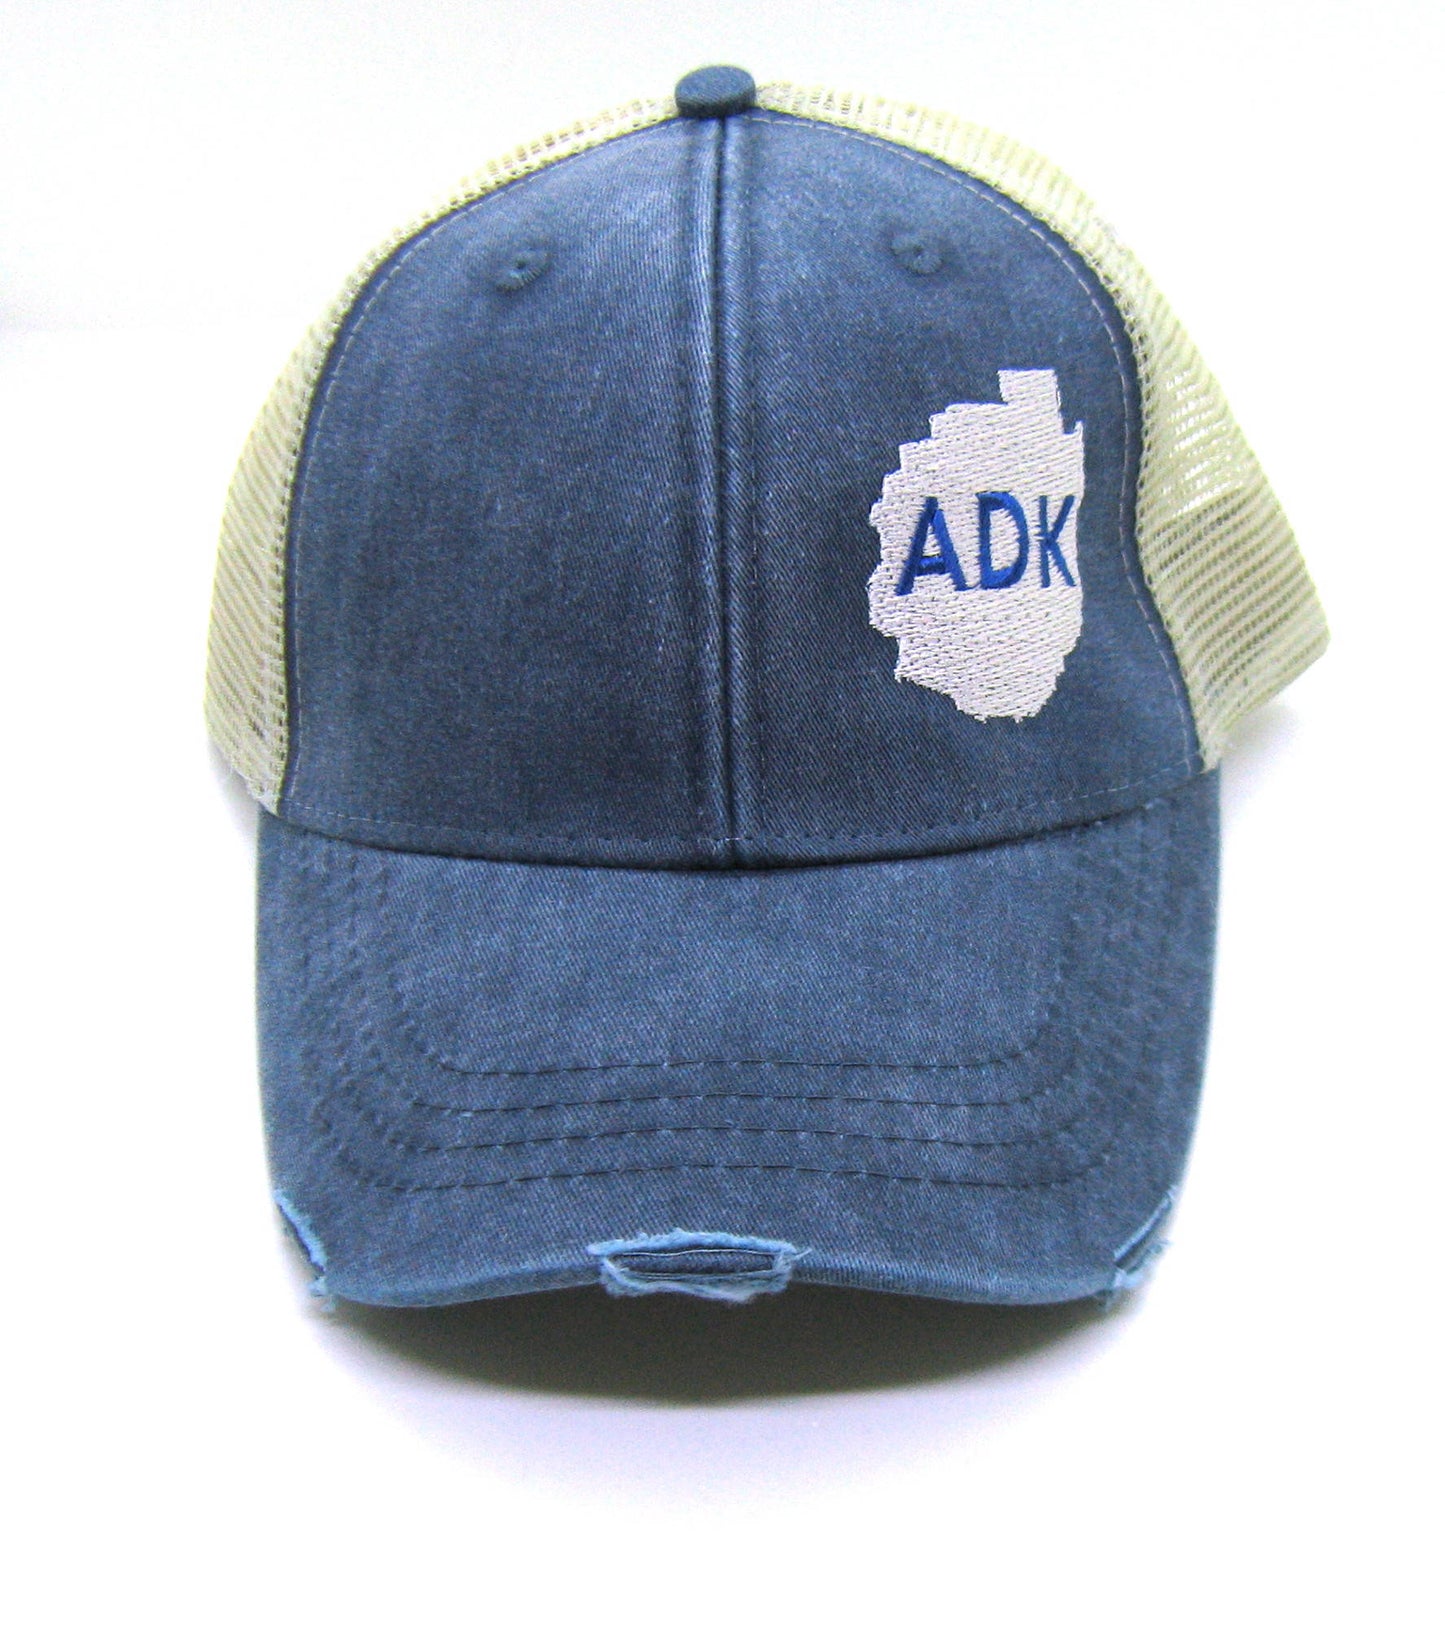 Adirondack Hat - Navy Blue Distressed Snapback Trucker Hat - ADK Adirondack park